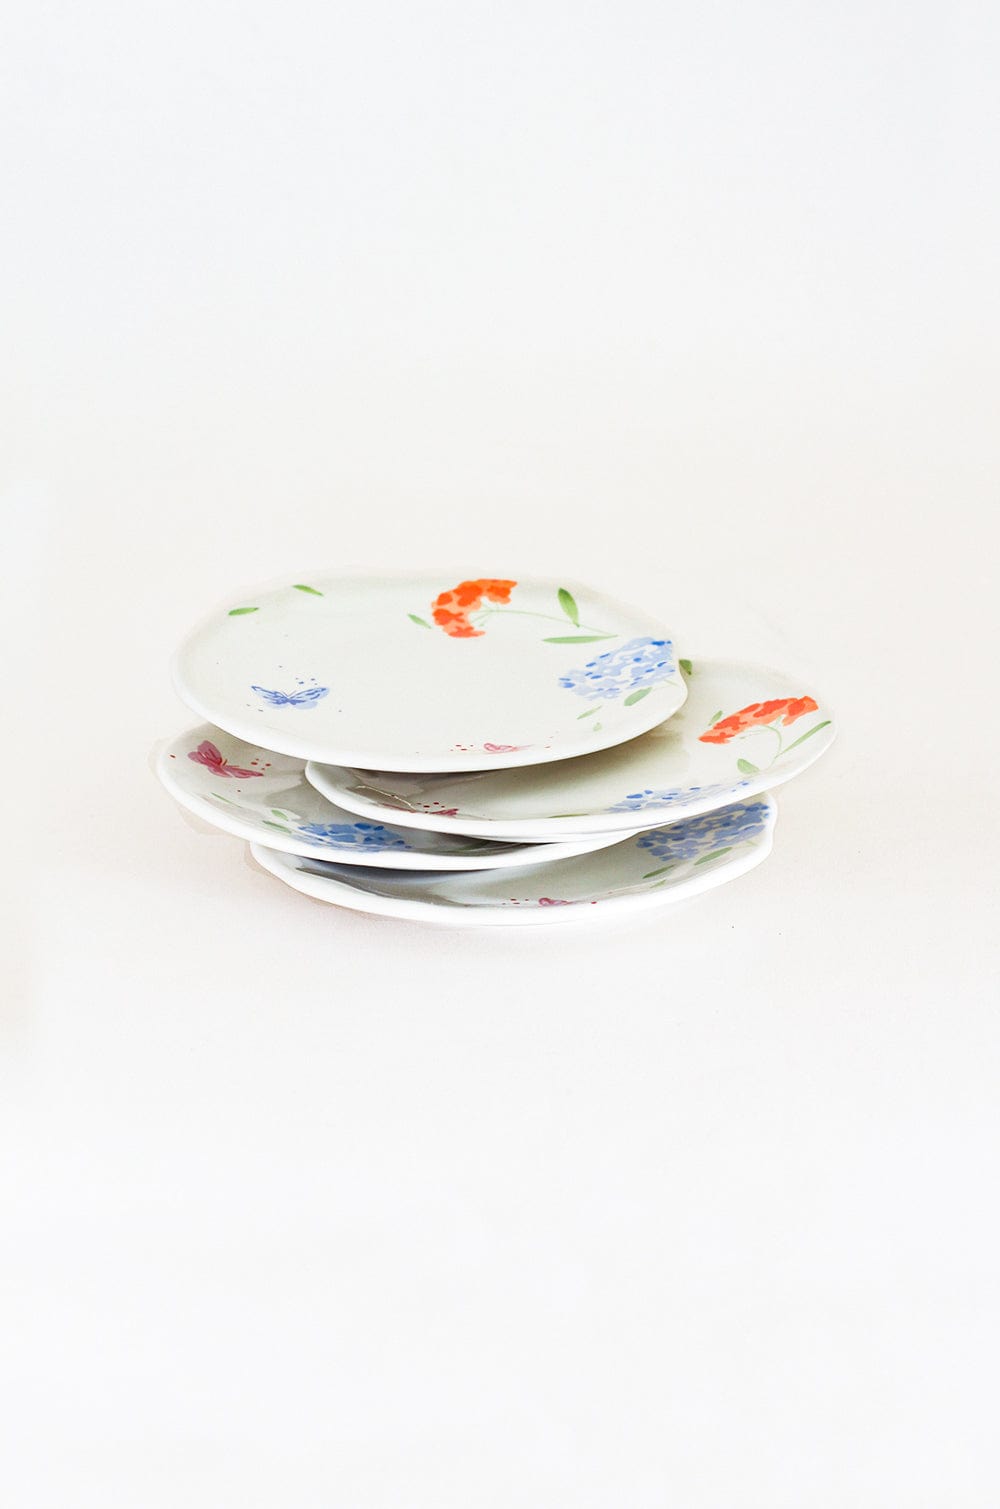 Plates Wildflower Meadow Handpainted Ceramic Side Plates - Set of 4